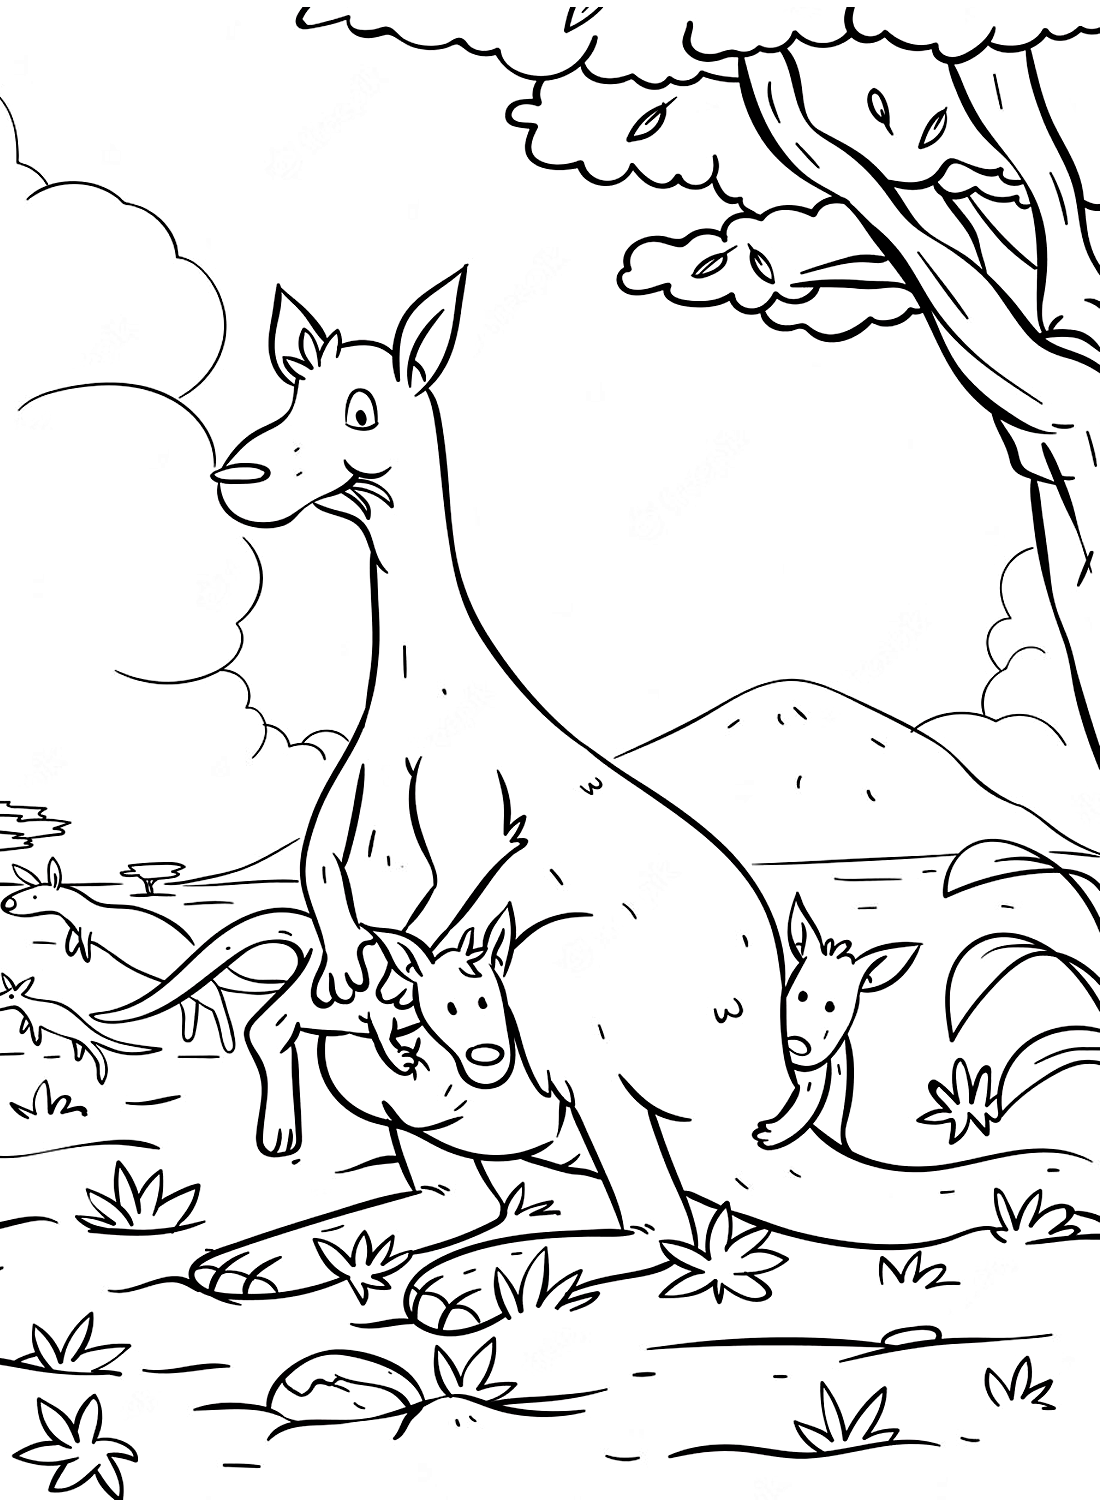 Kangaroo’s family from Kangaroo